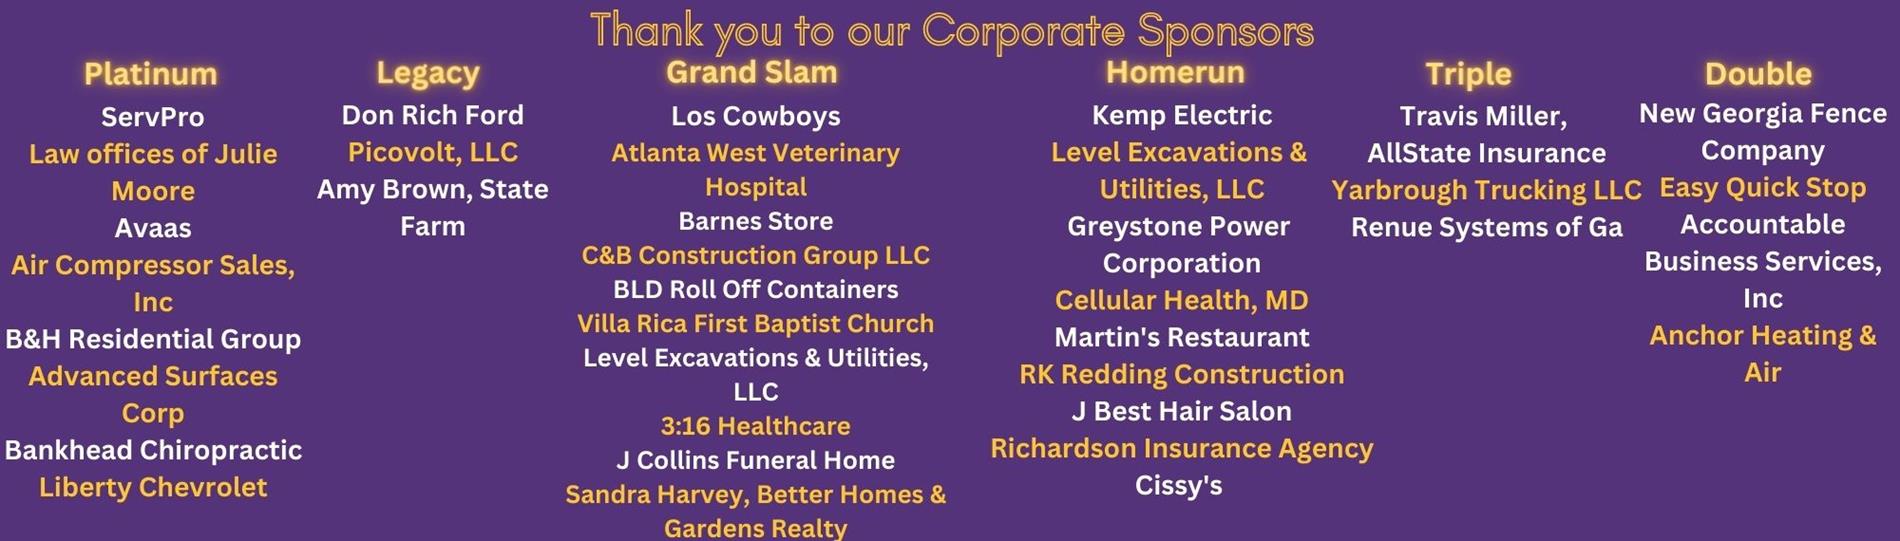 corporate sponsors